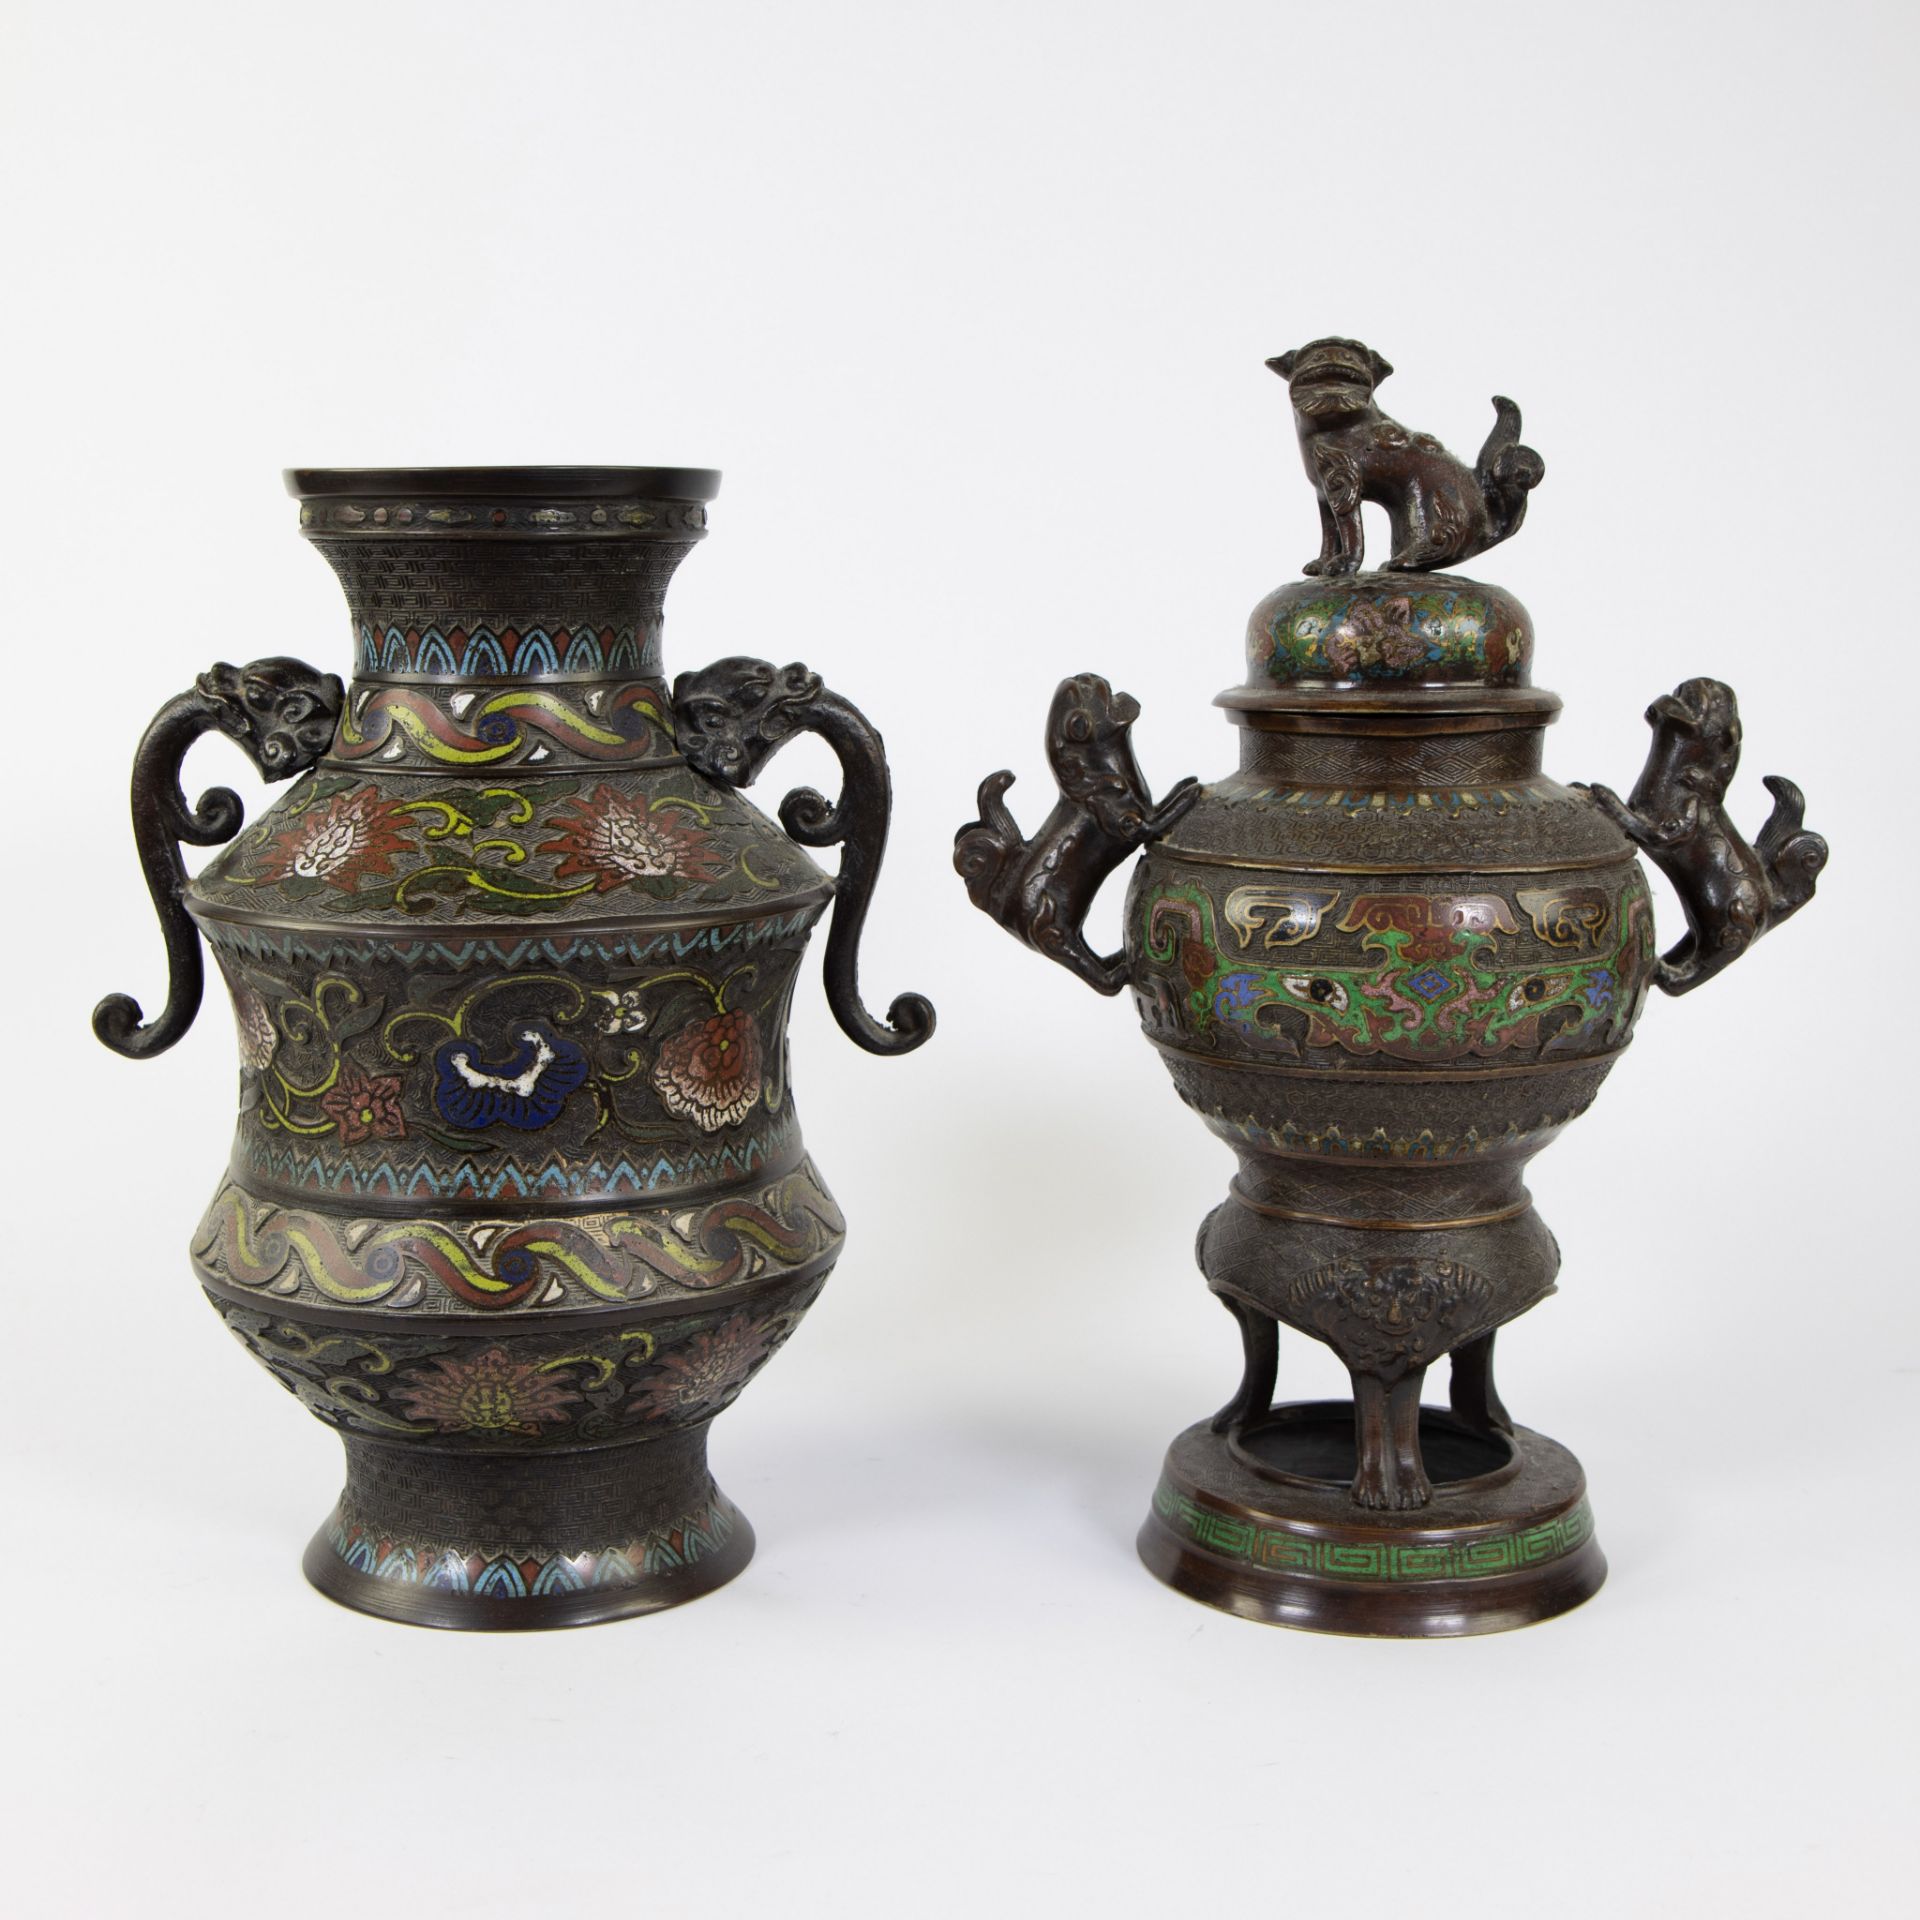 Japanese champlevé vase and incense burner, 19th century